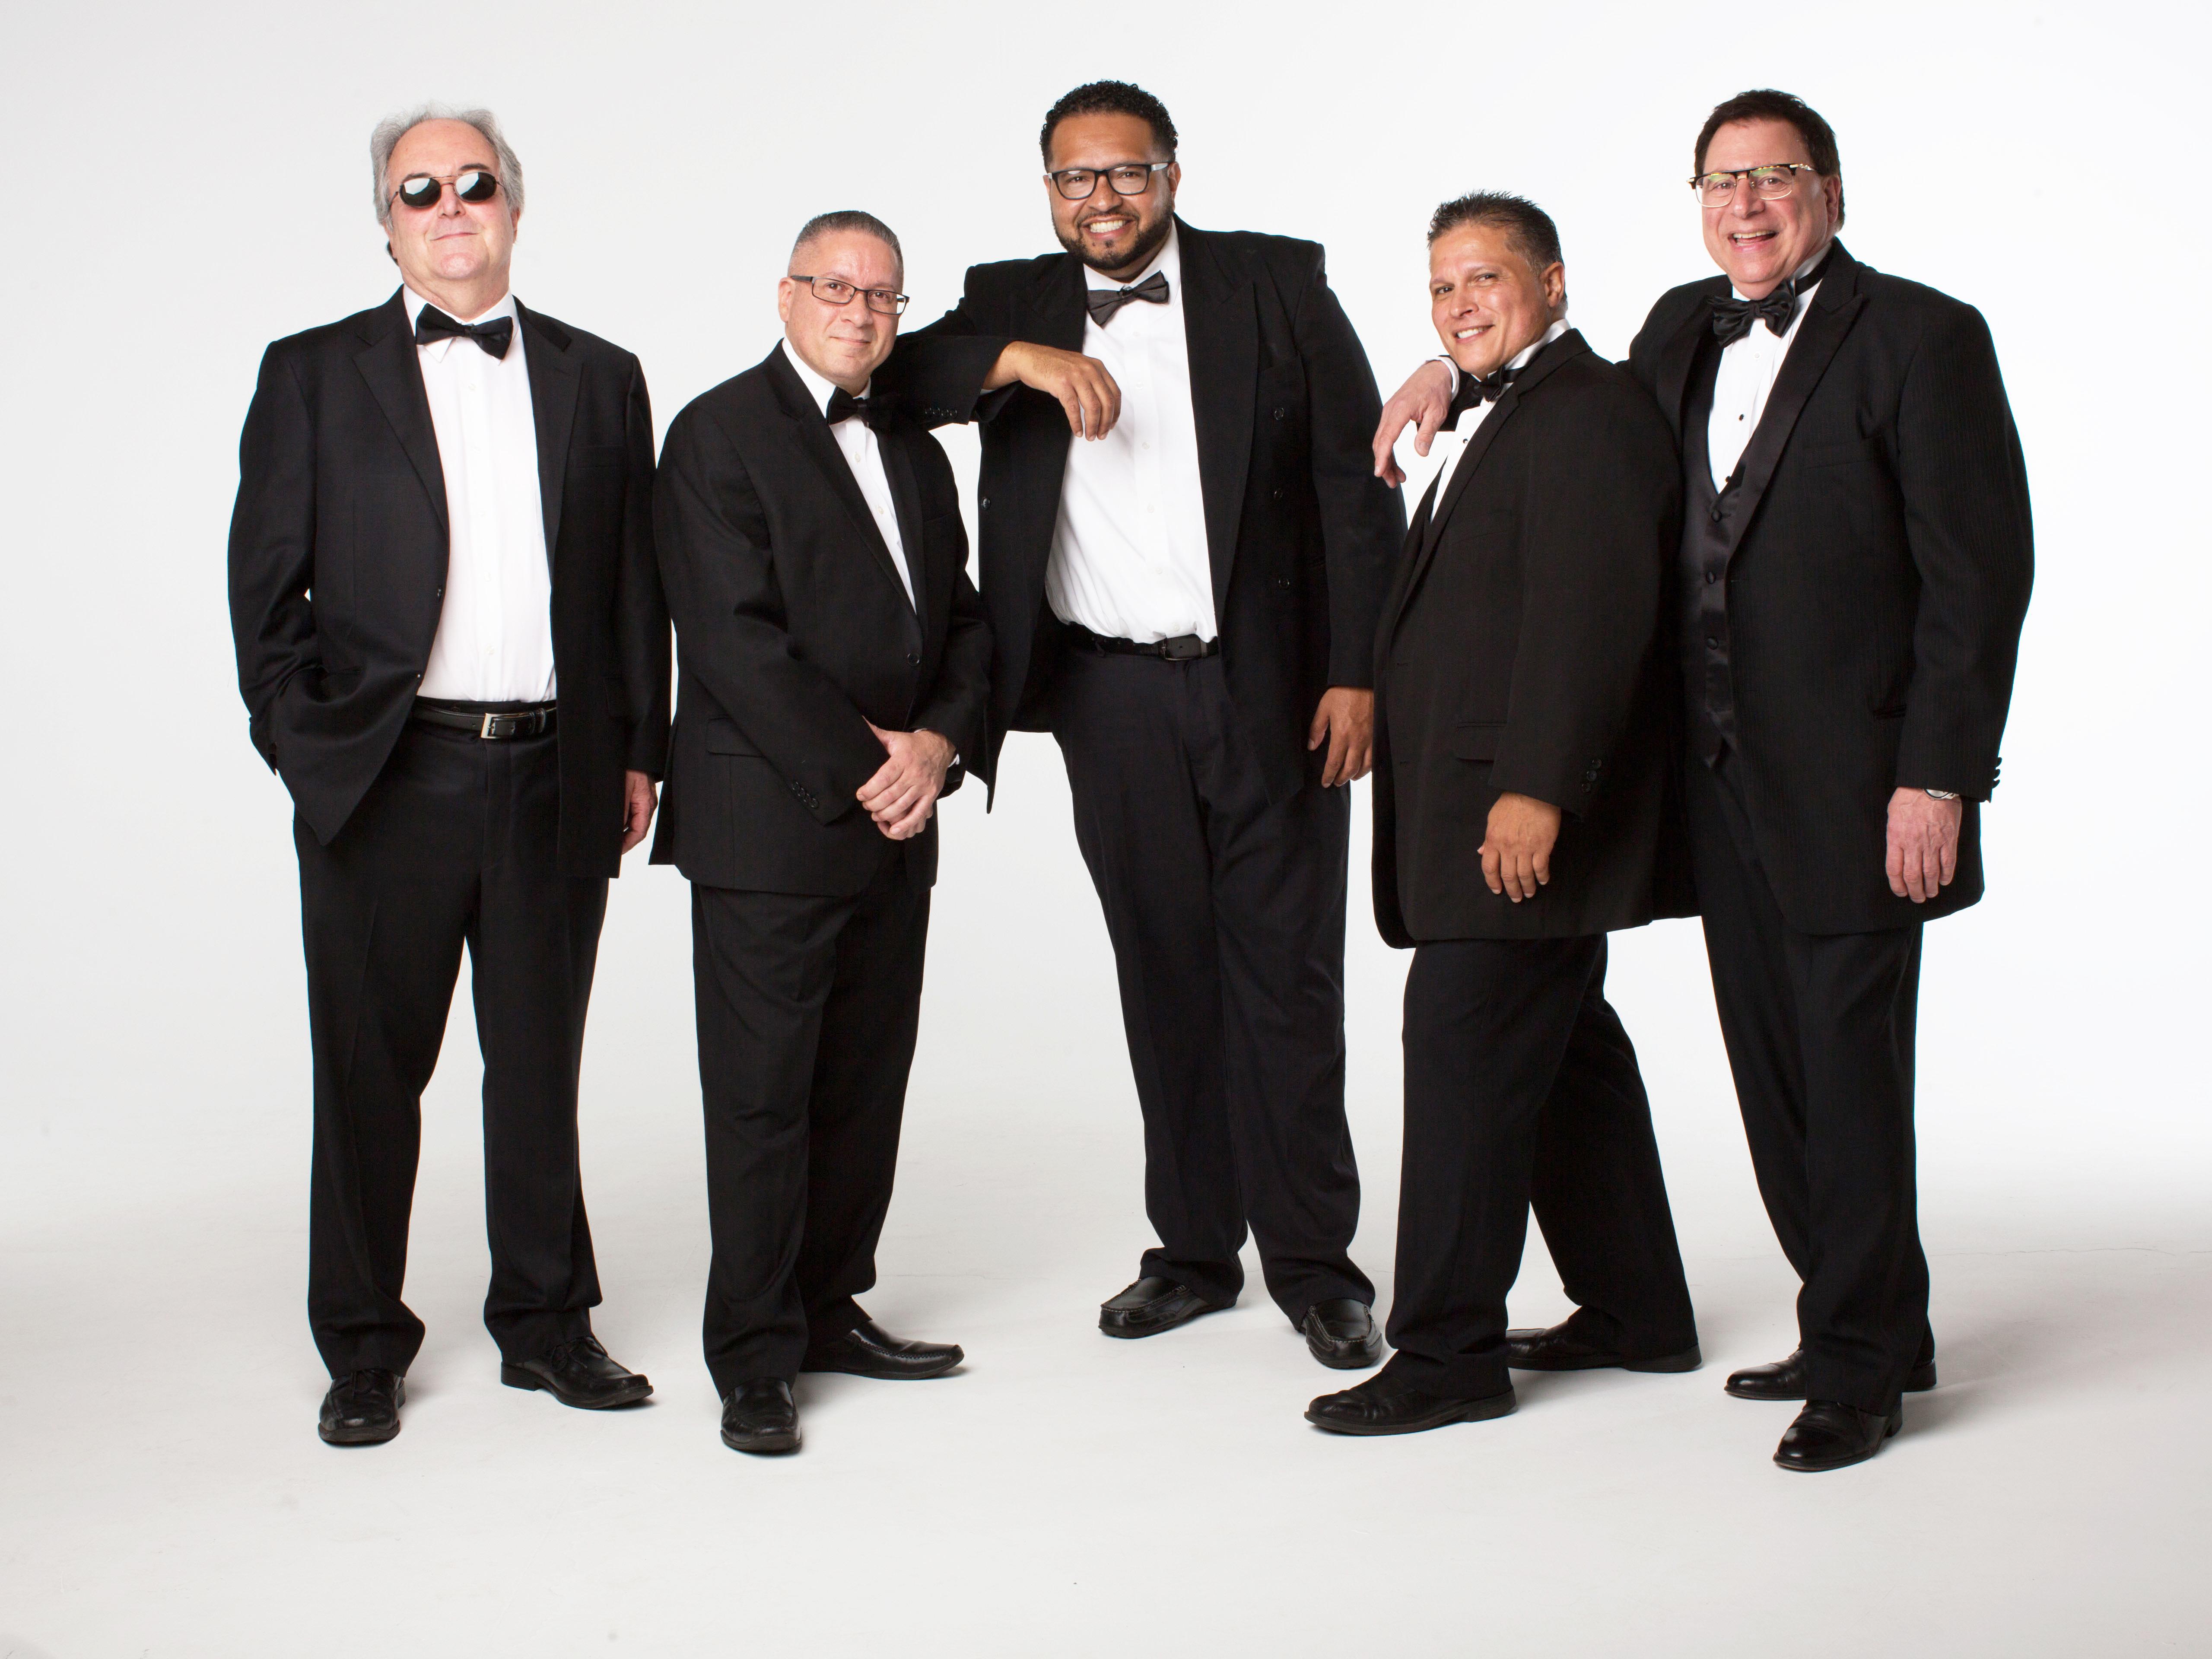 Photo of the Mambo Kings quartet, who play Latin jazz